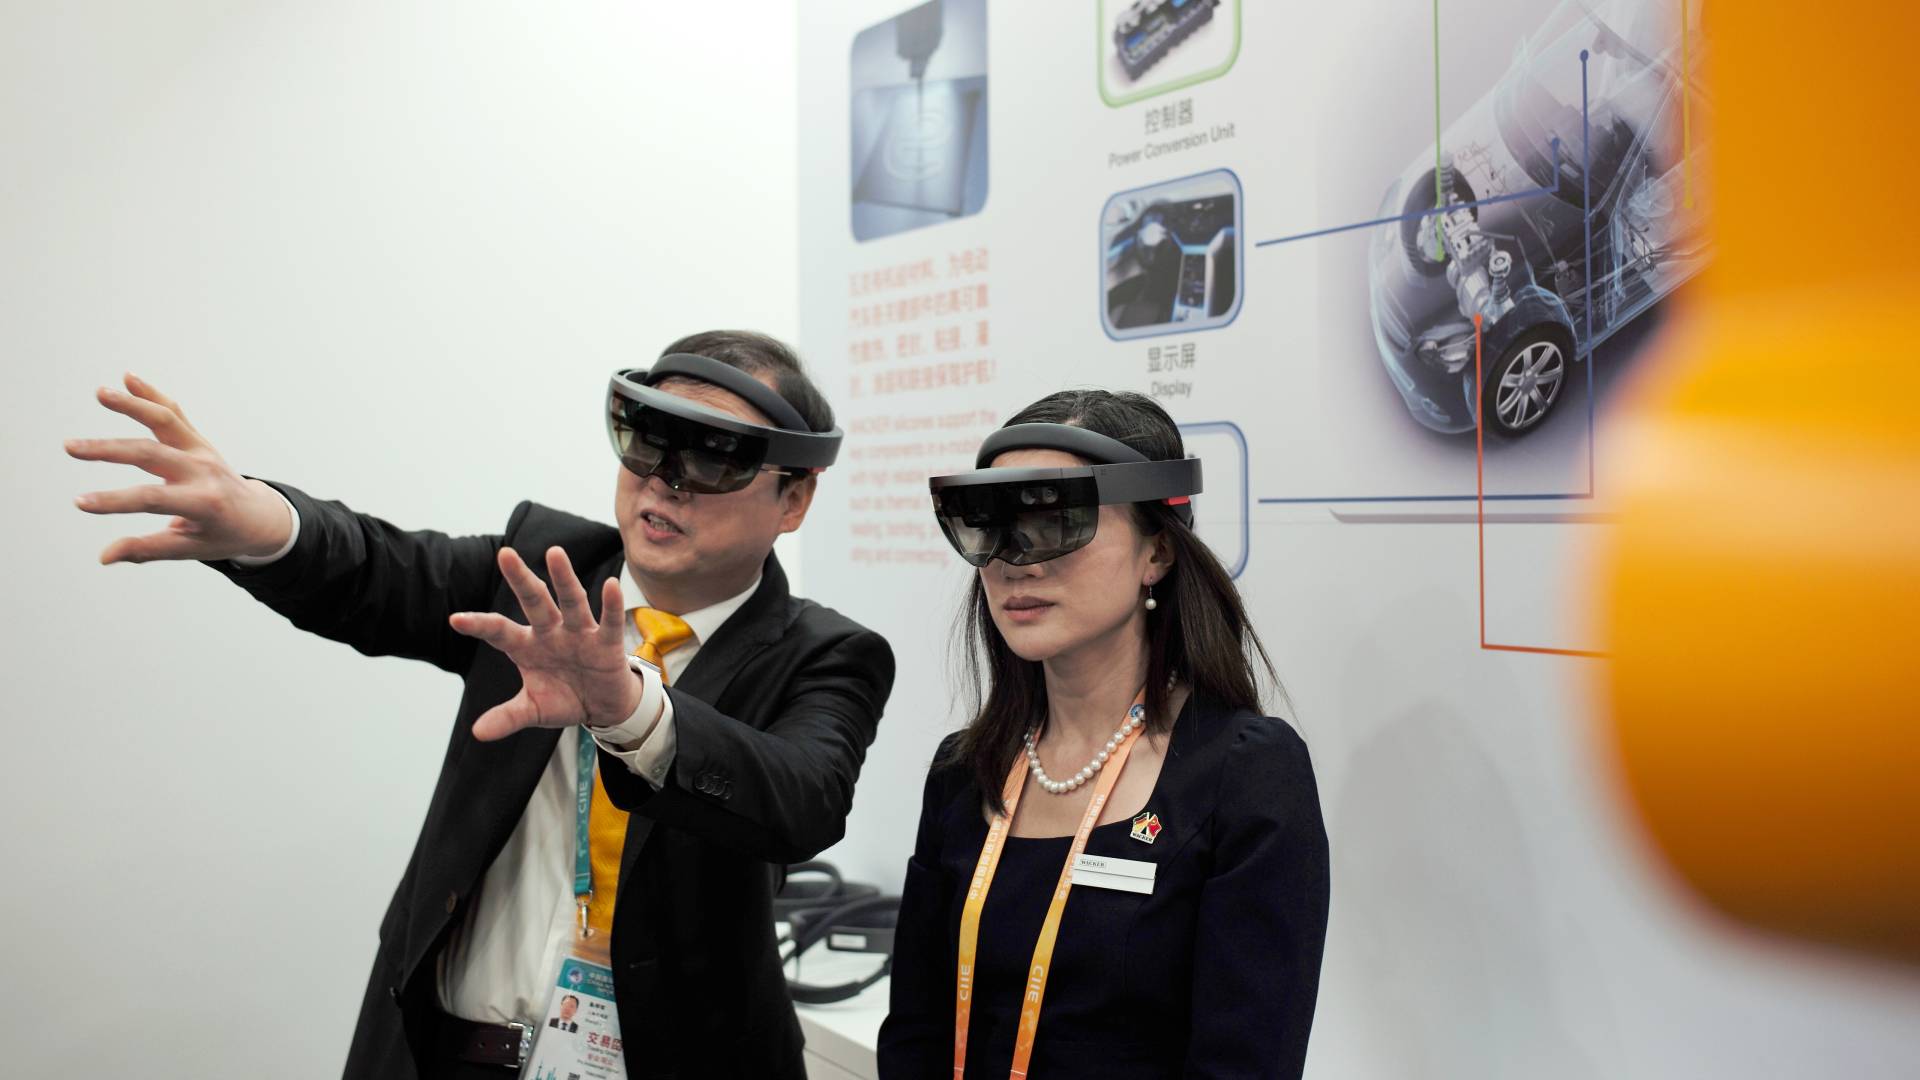 Trade fair participants with HoloLens